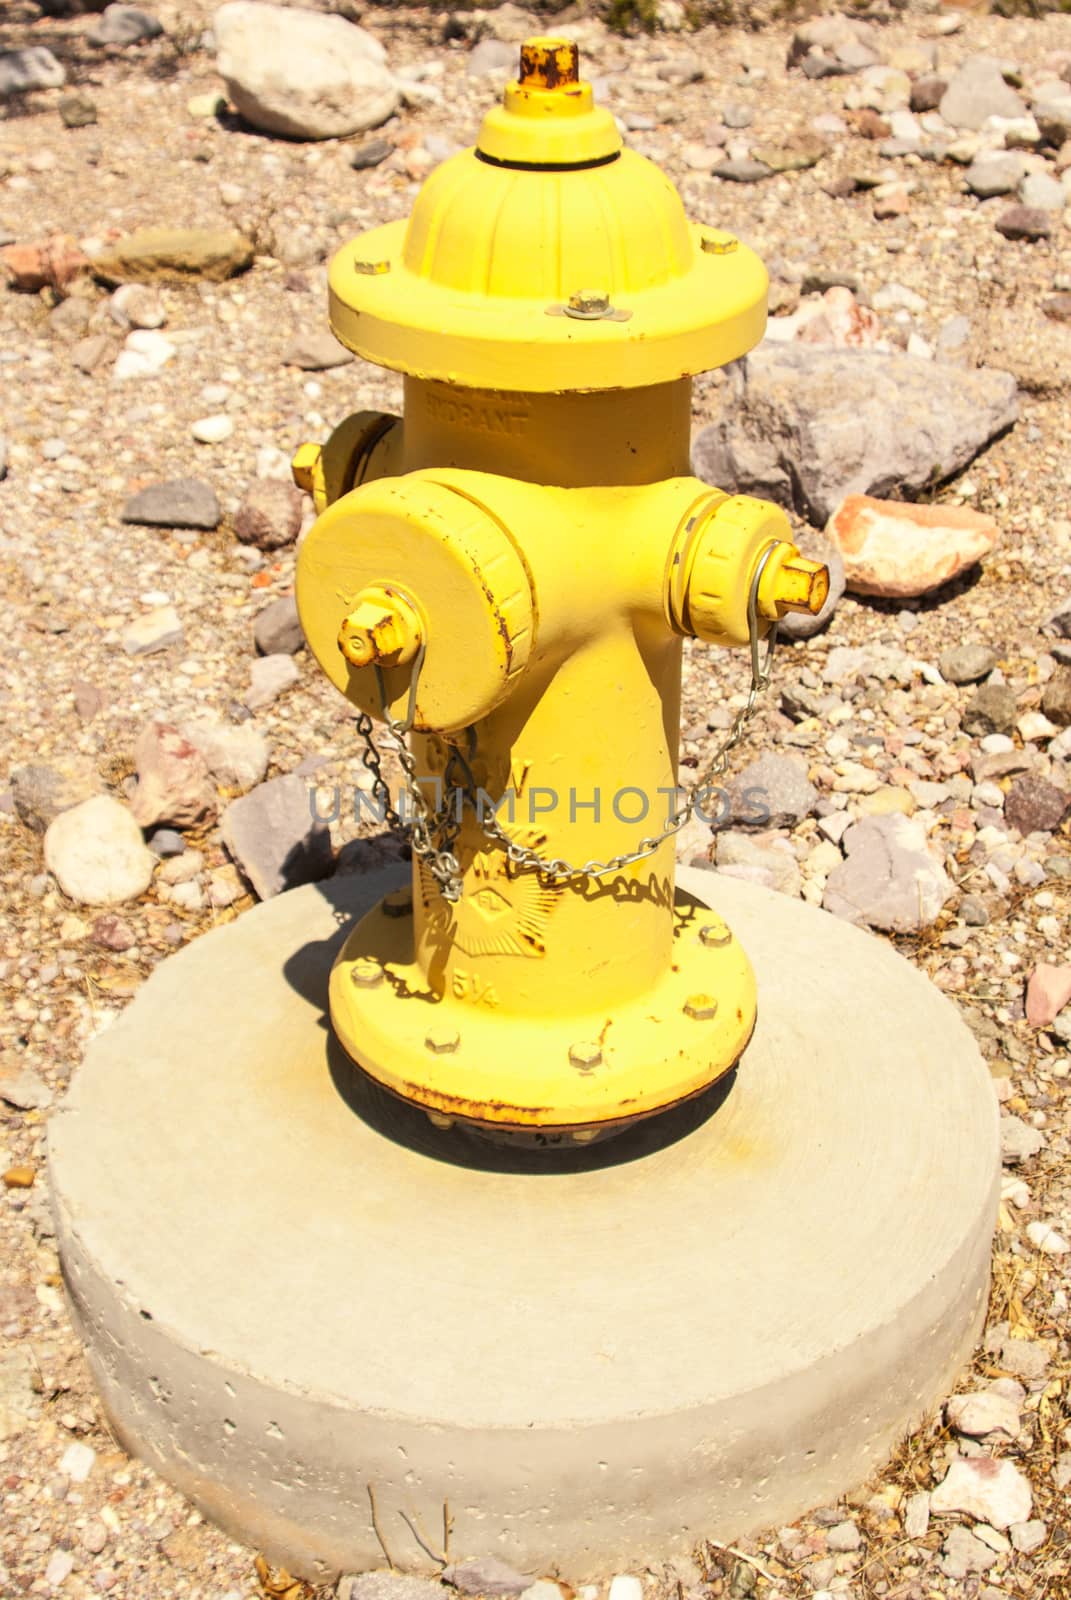 Yrellow Fire Hydrant by emattil